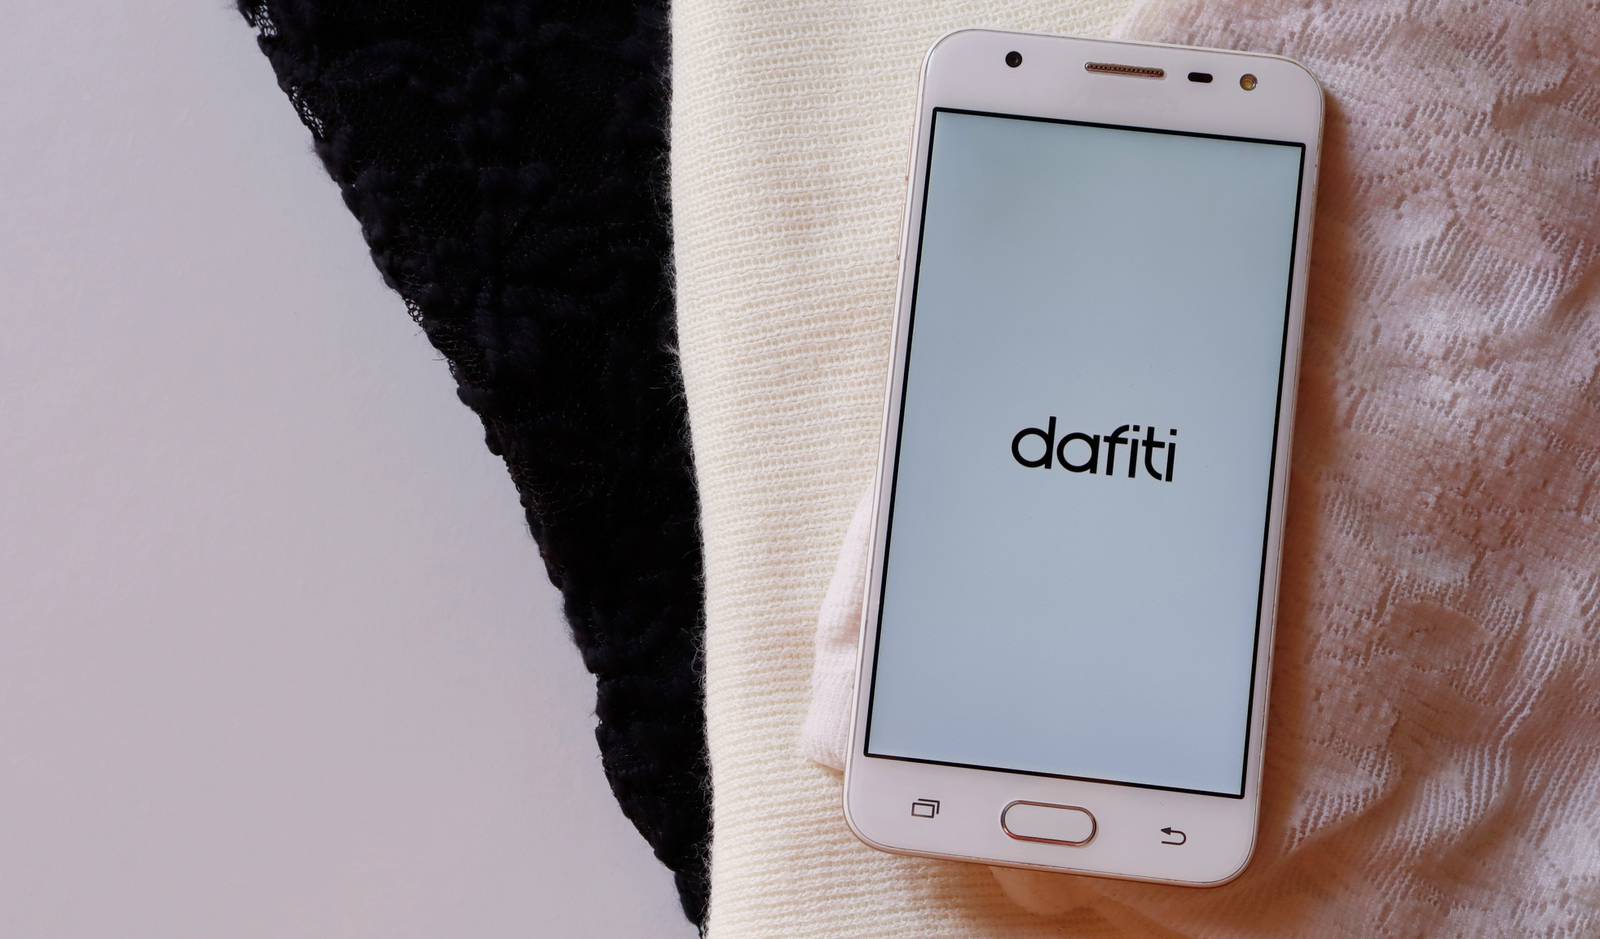 Dafiti argentina online chat Video chat